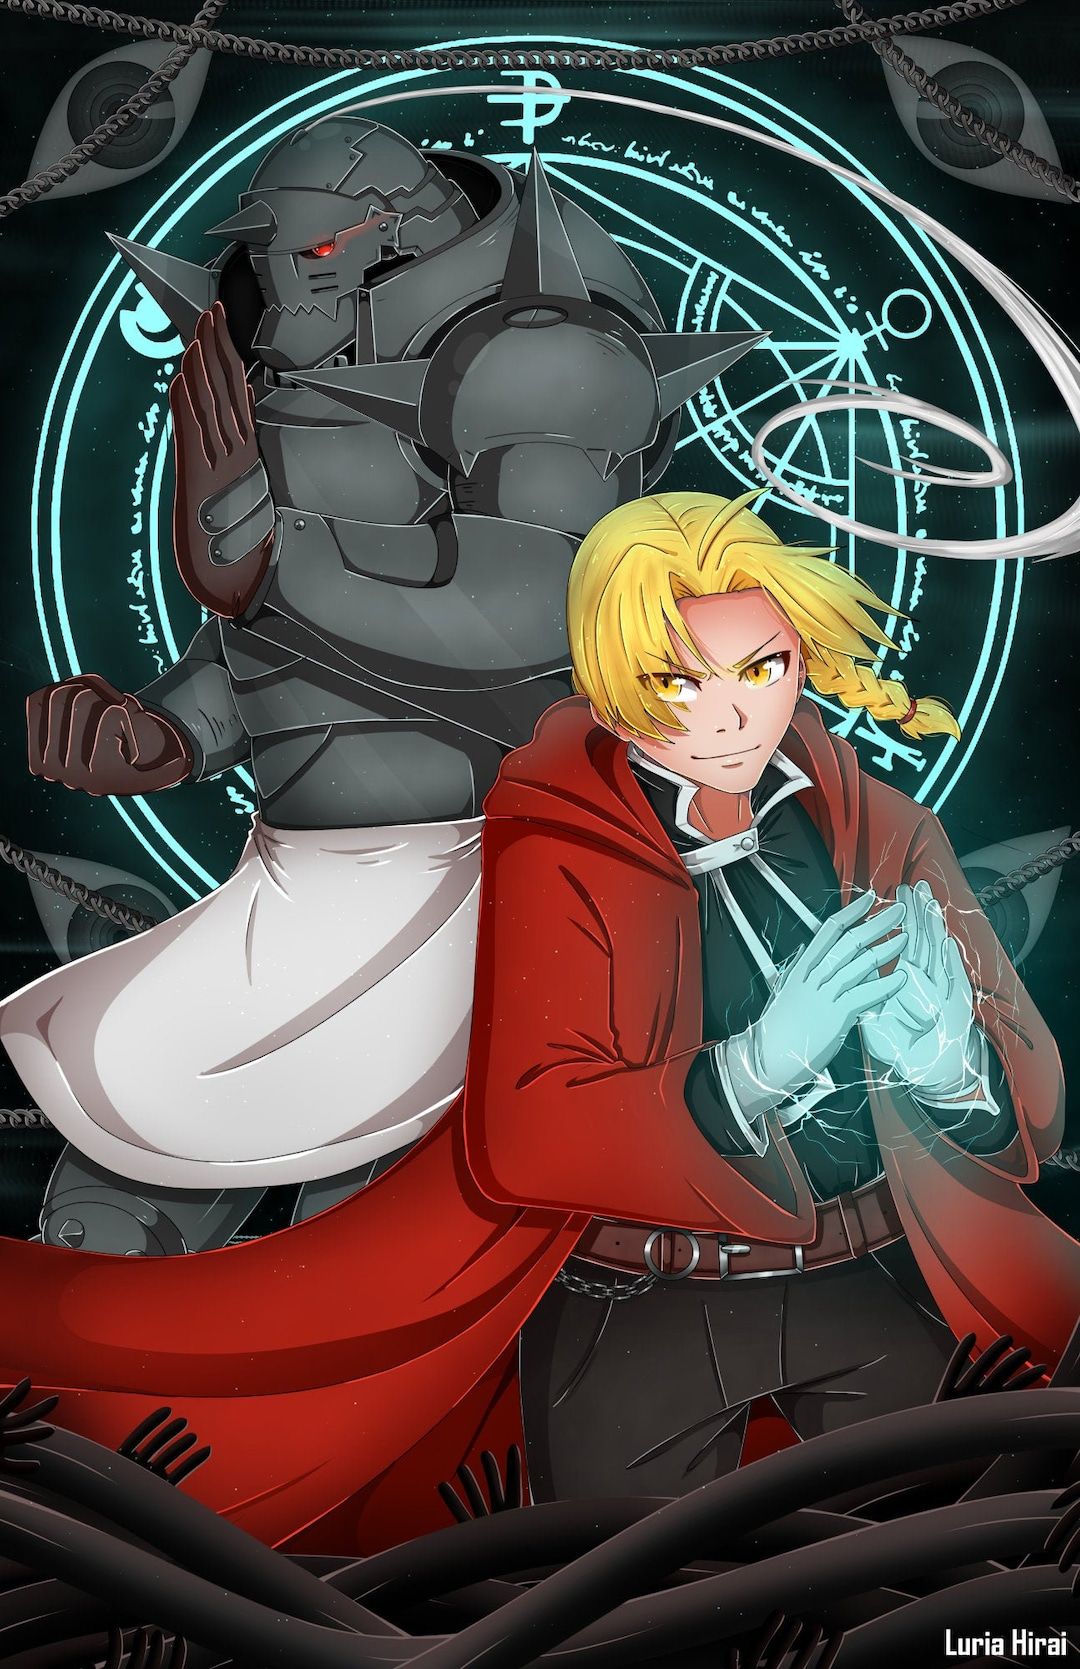 Edward Elric and Alphonse Elric from Fullmetal Alchemist: Brotherhood. - Fullmetal Alchemist